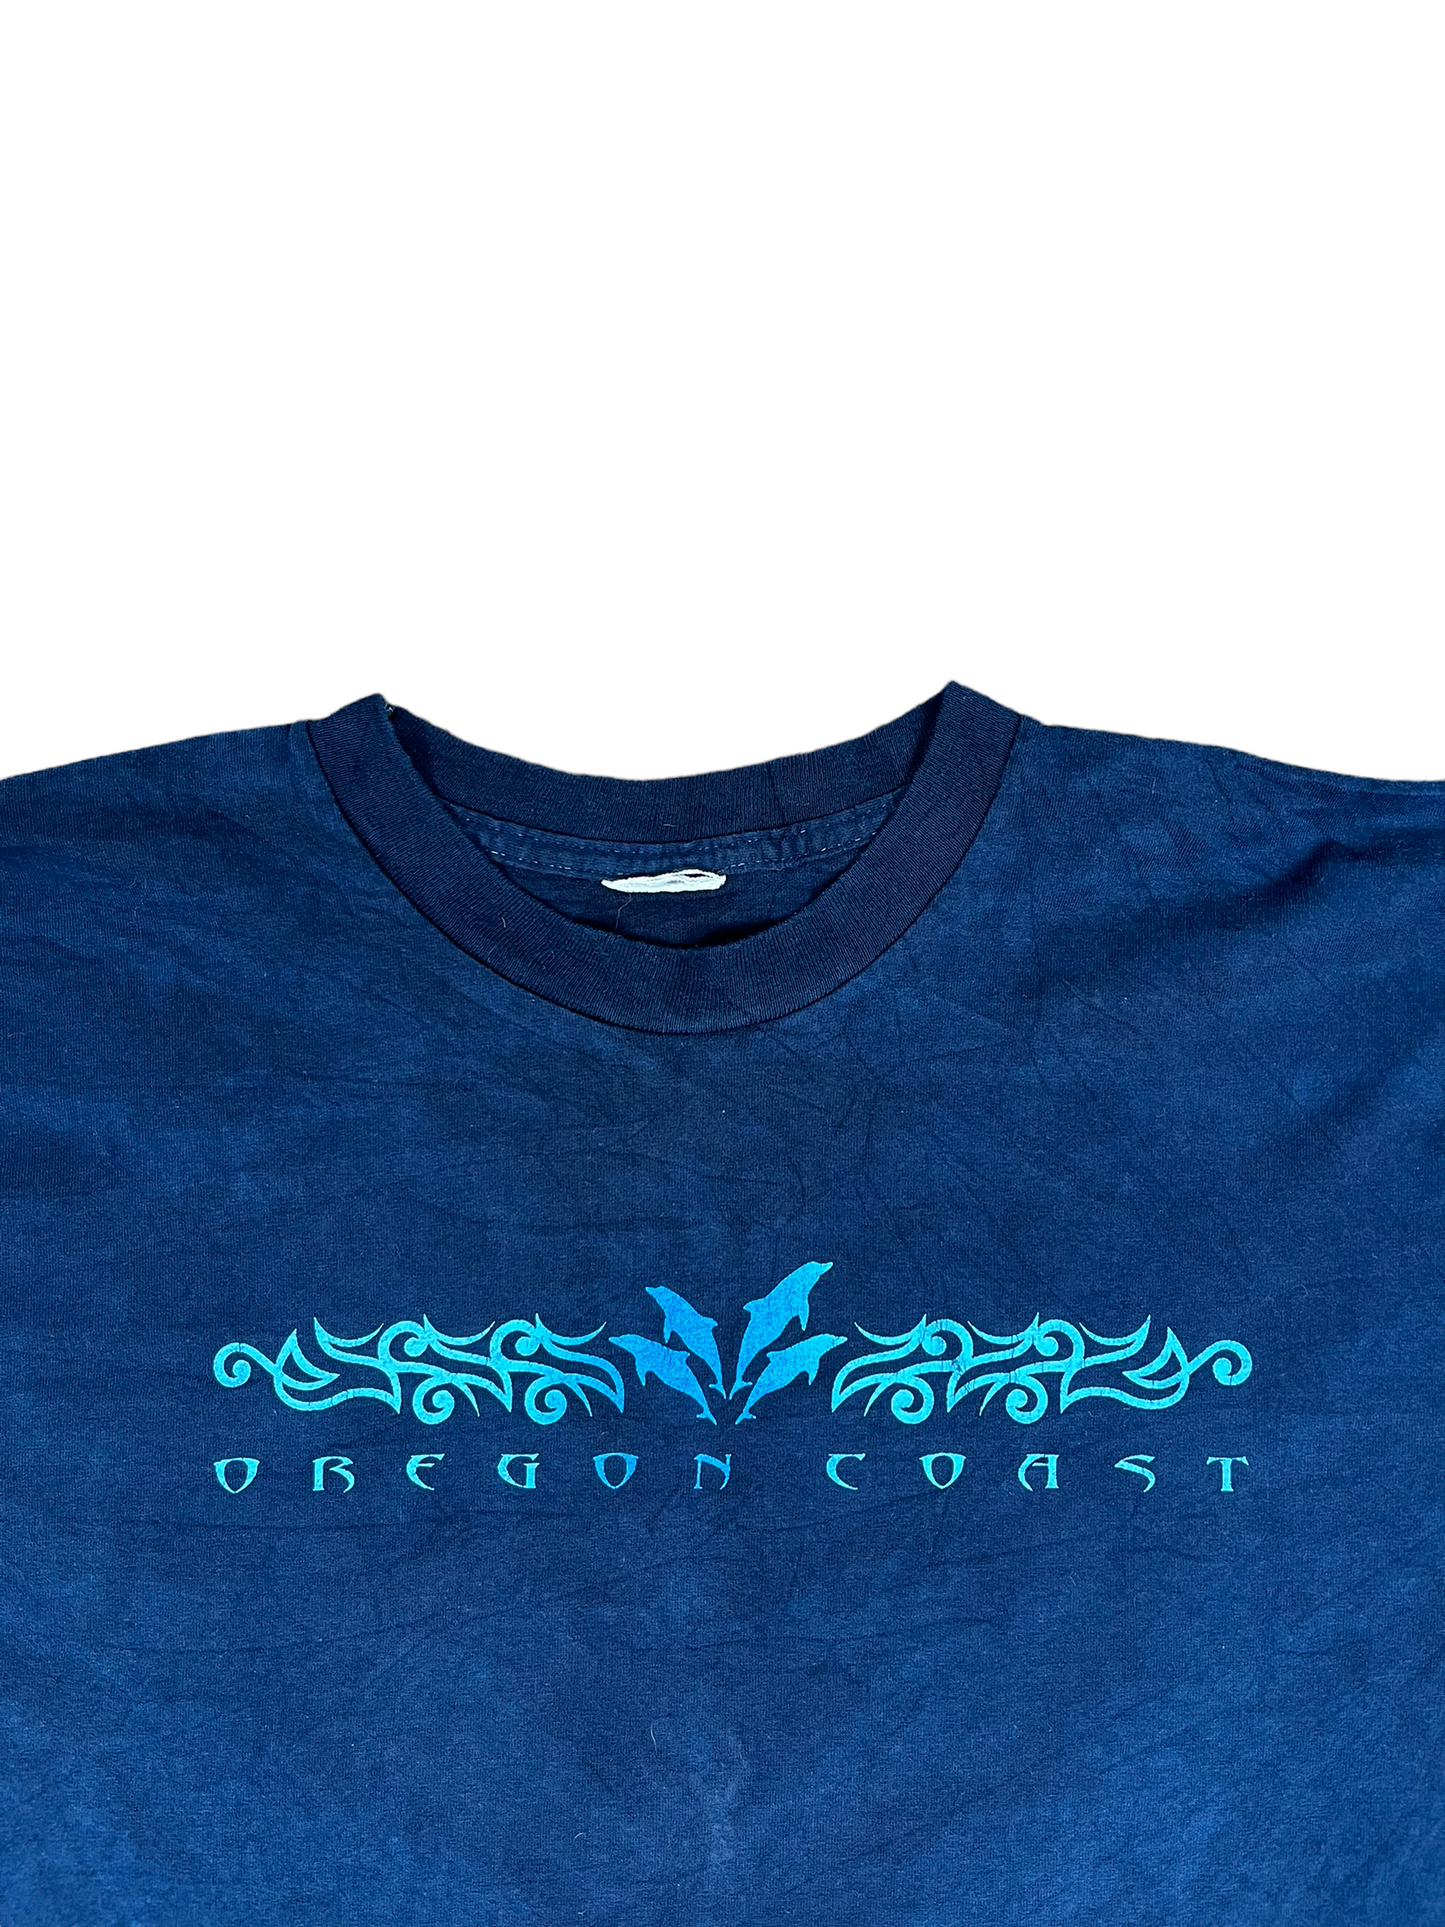 Vintage 90’s Oregon Coast L/S T Shirt - XL